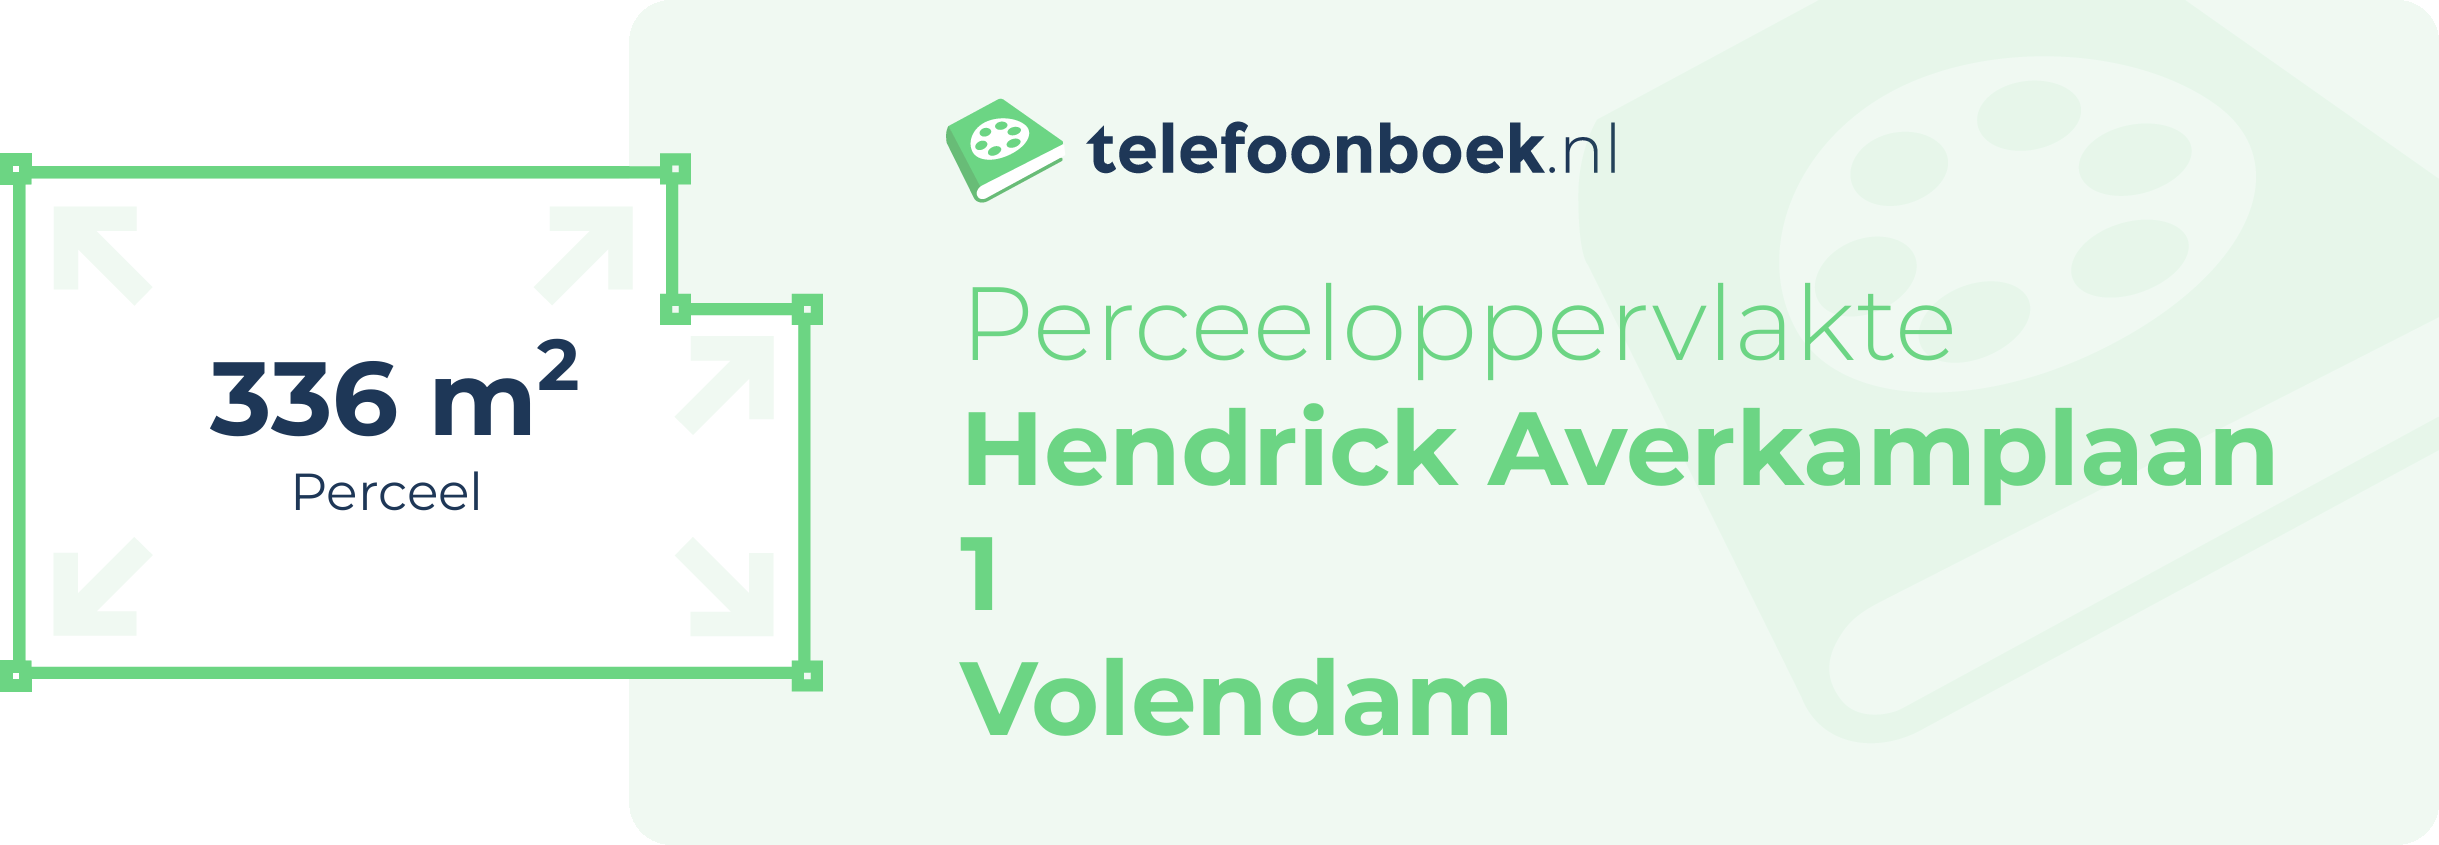 Perceeloppervlakte Hendrick Averkamplaan 1 Volendam